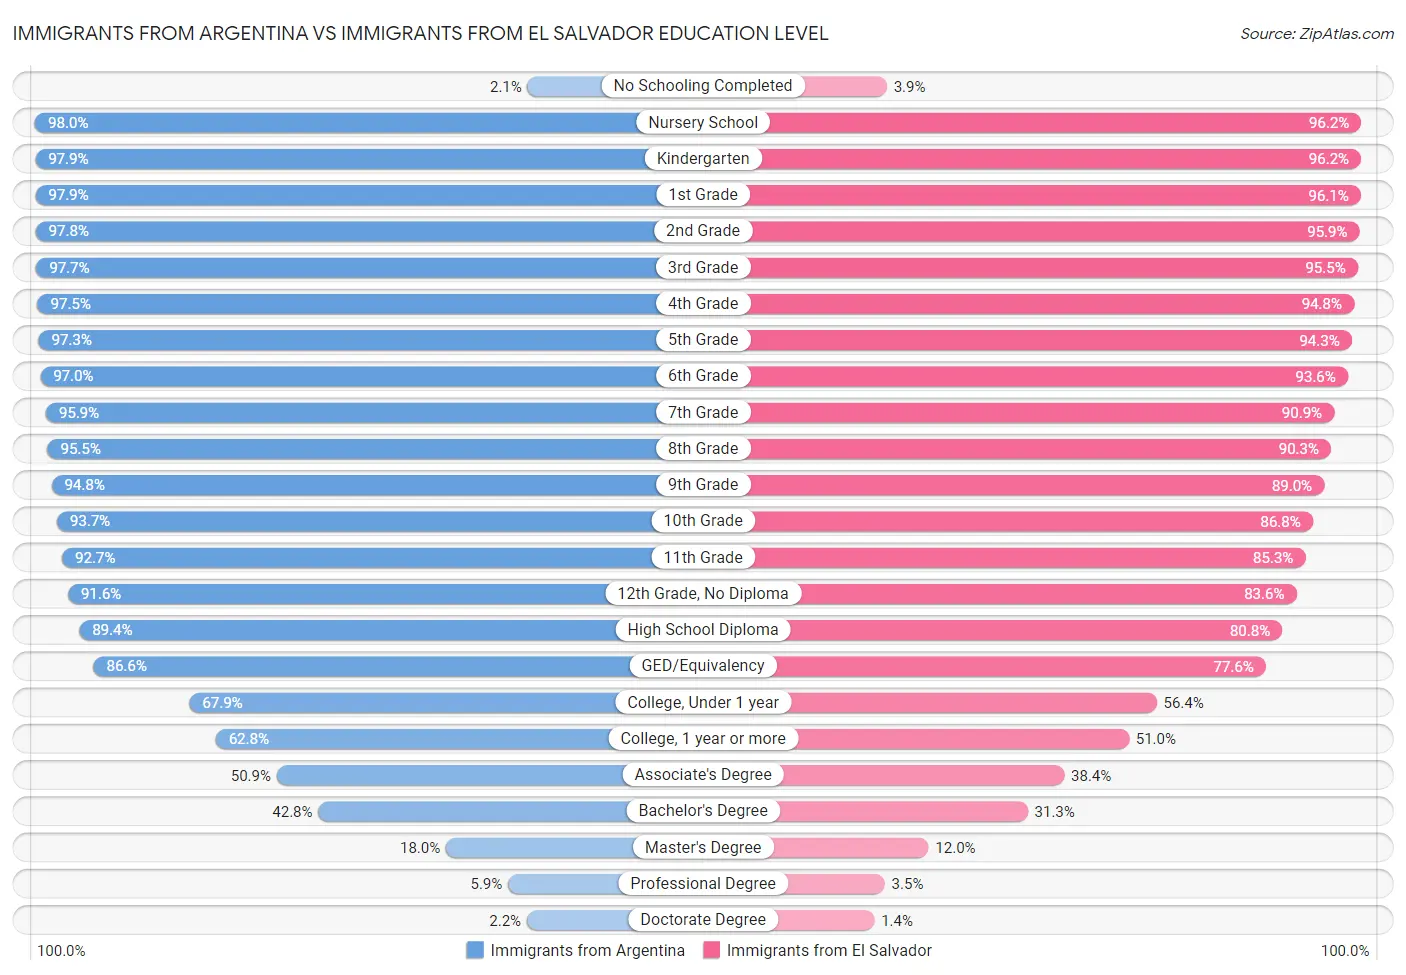 Immigrants from Argentina vs Immigrants from El Salvador Education Level